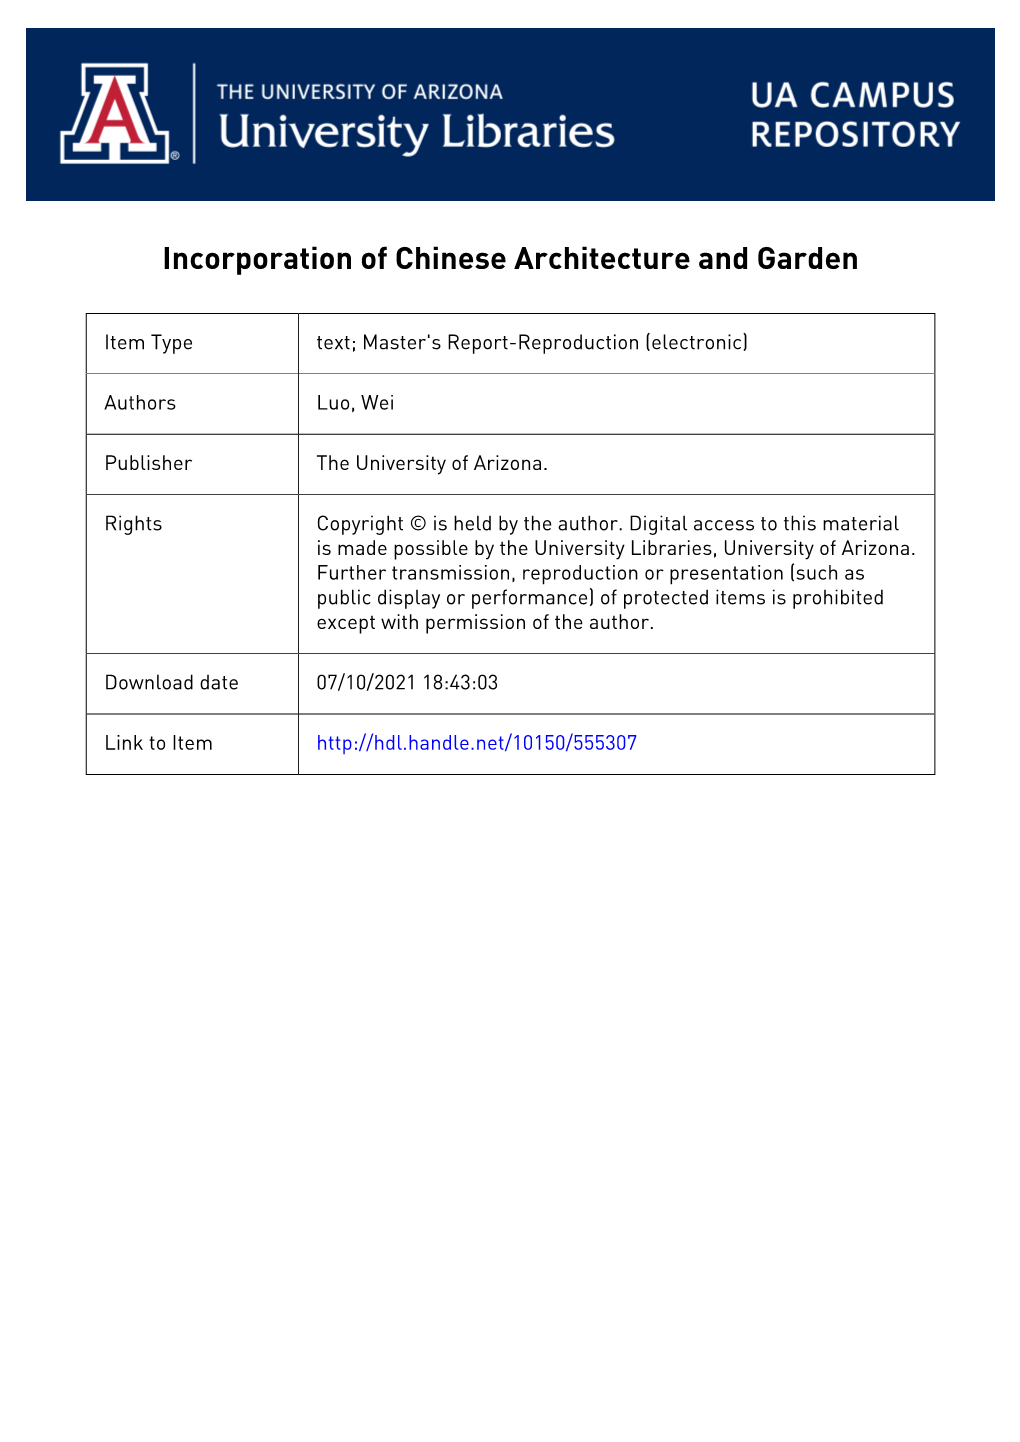 Architecture and Garden